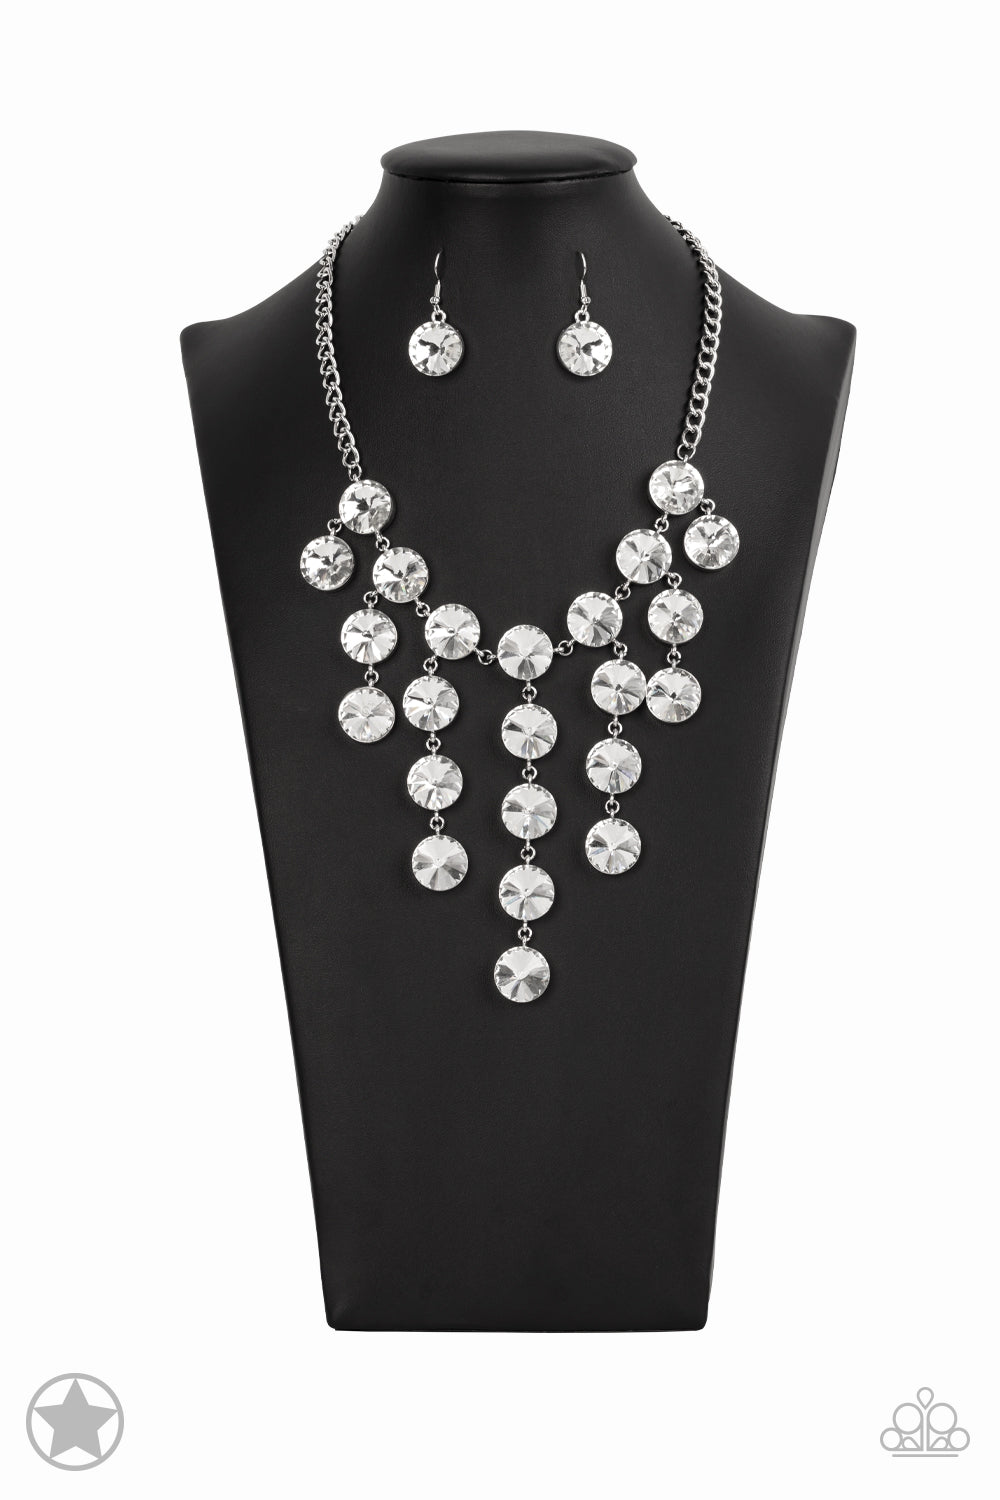 Paparazzi Accessories - Spotlight Stunner #N702 White Necklace